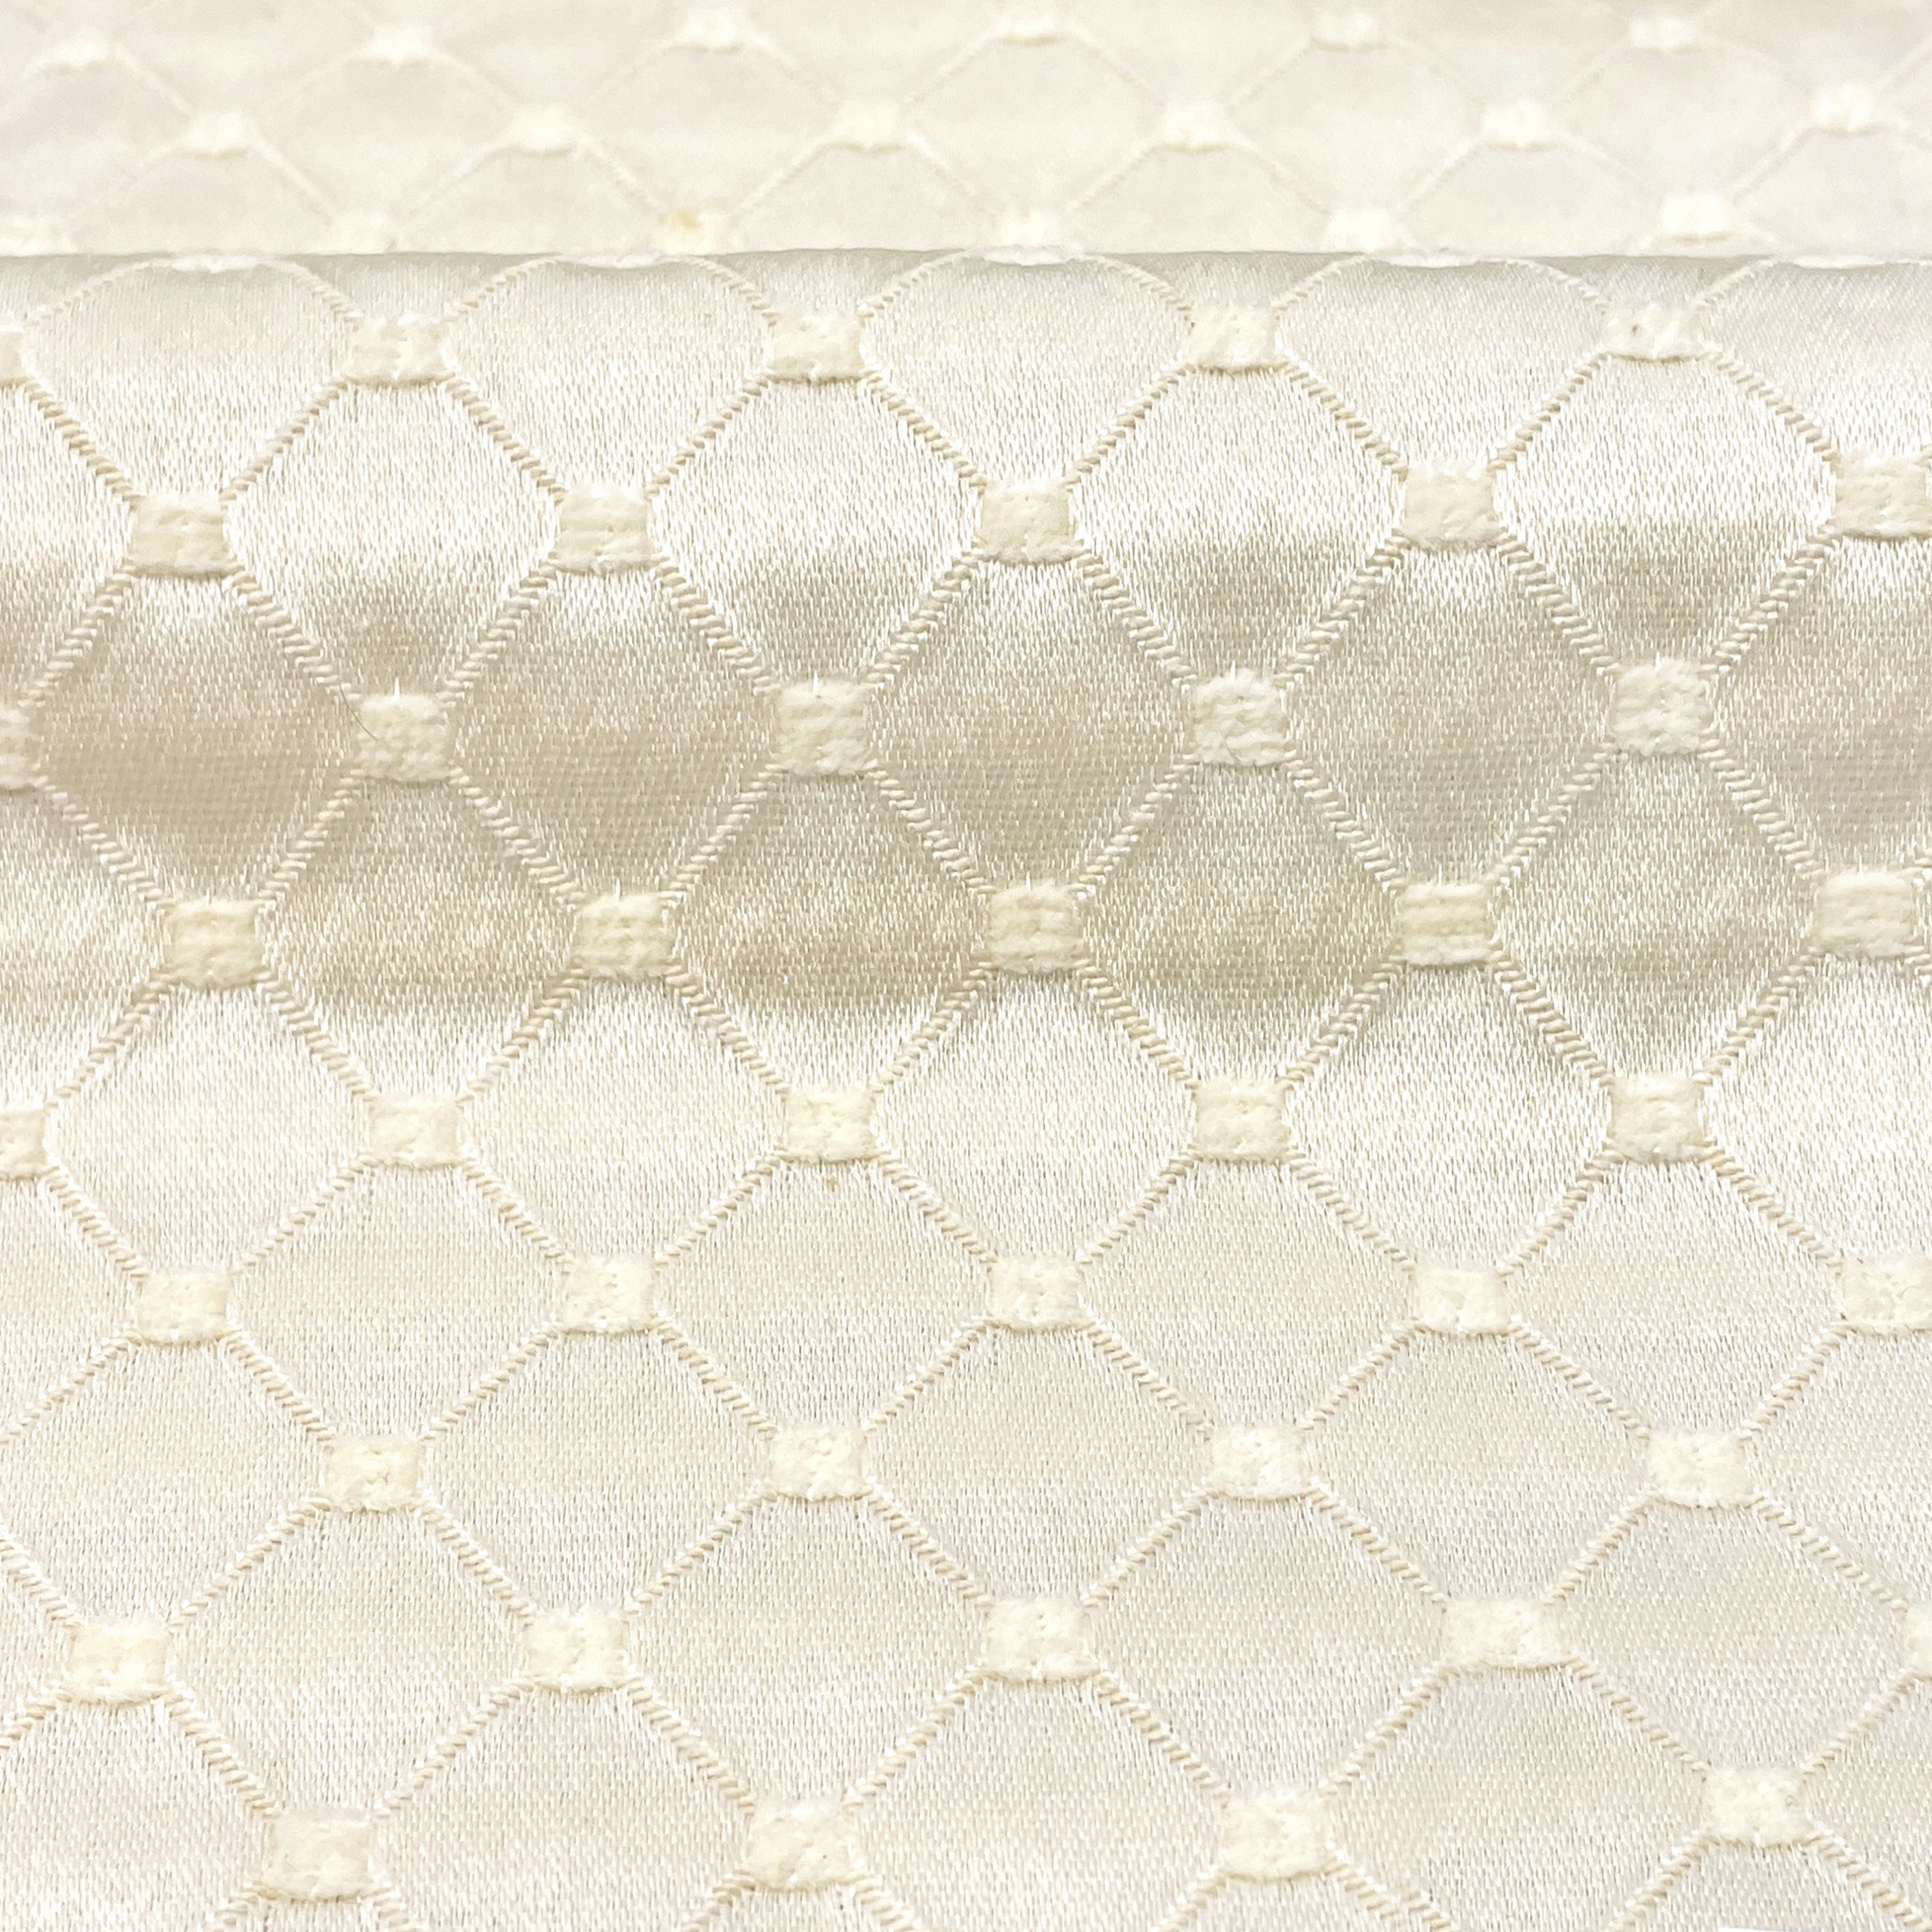 RENAISSANCE F OFF WHITE Diamond Jacquard Upholstery And Drapery Fabric